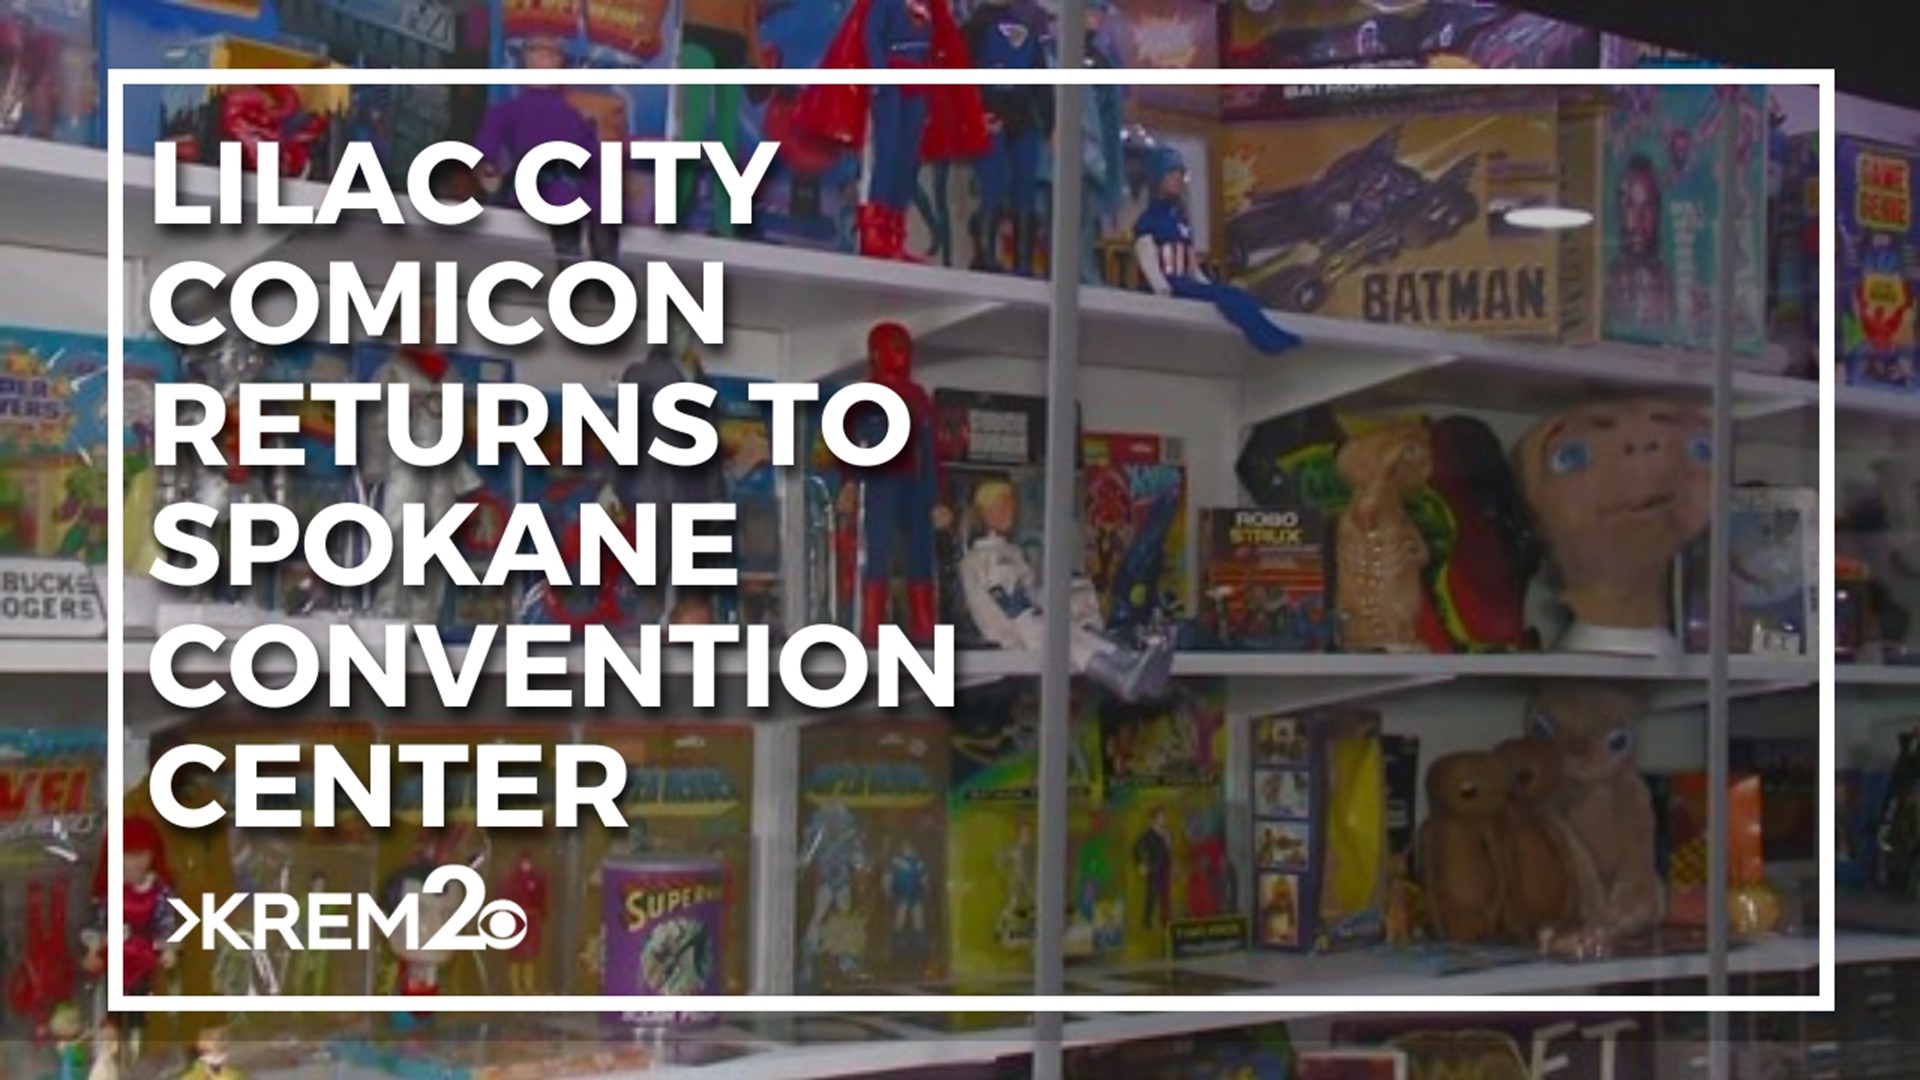 Lilac City Comicon returns to Spokane Convention Center